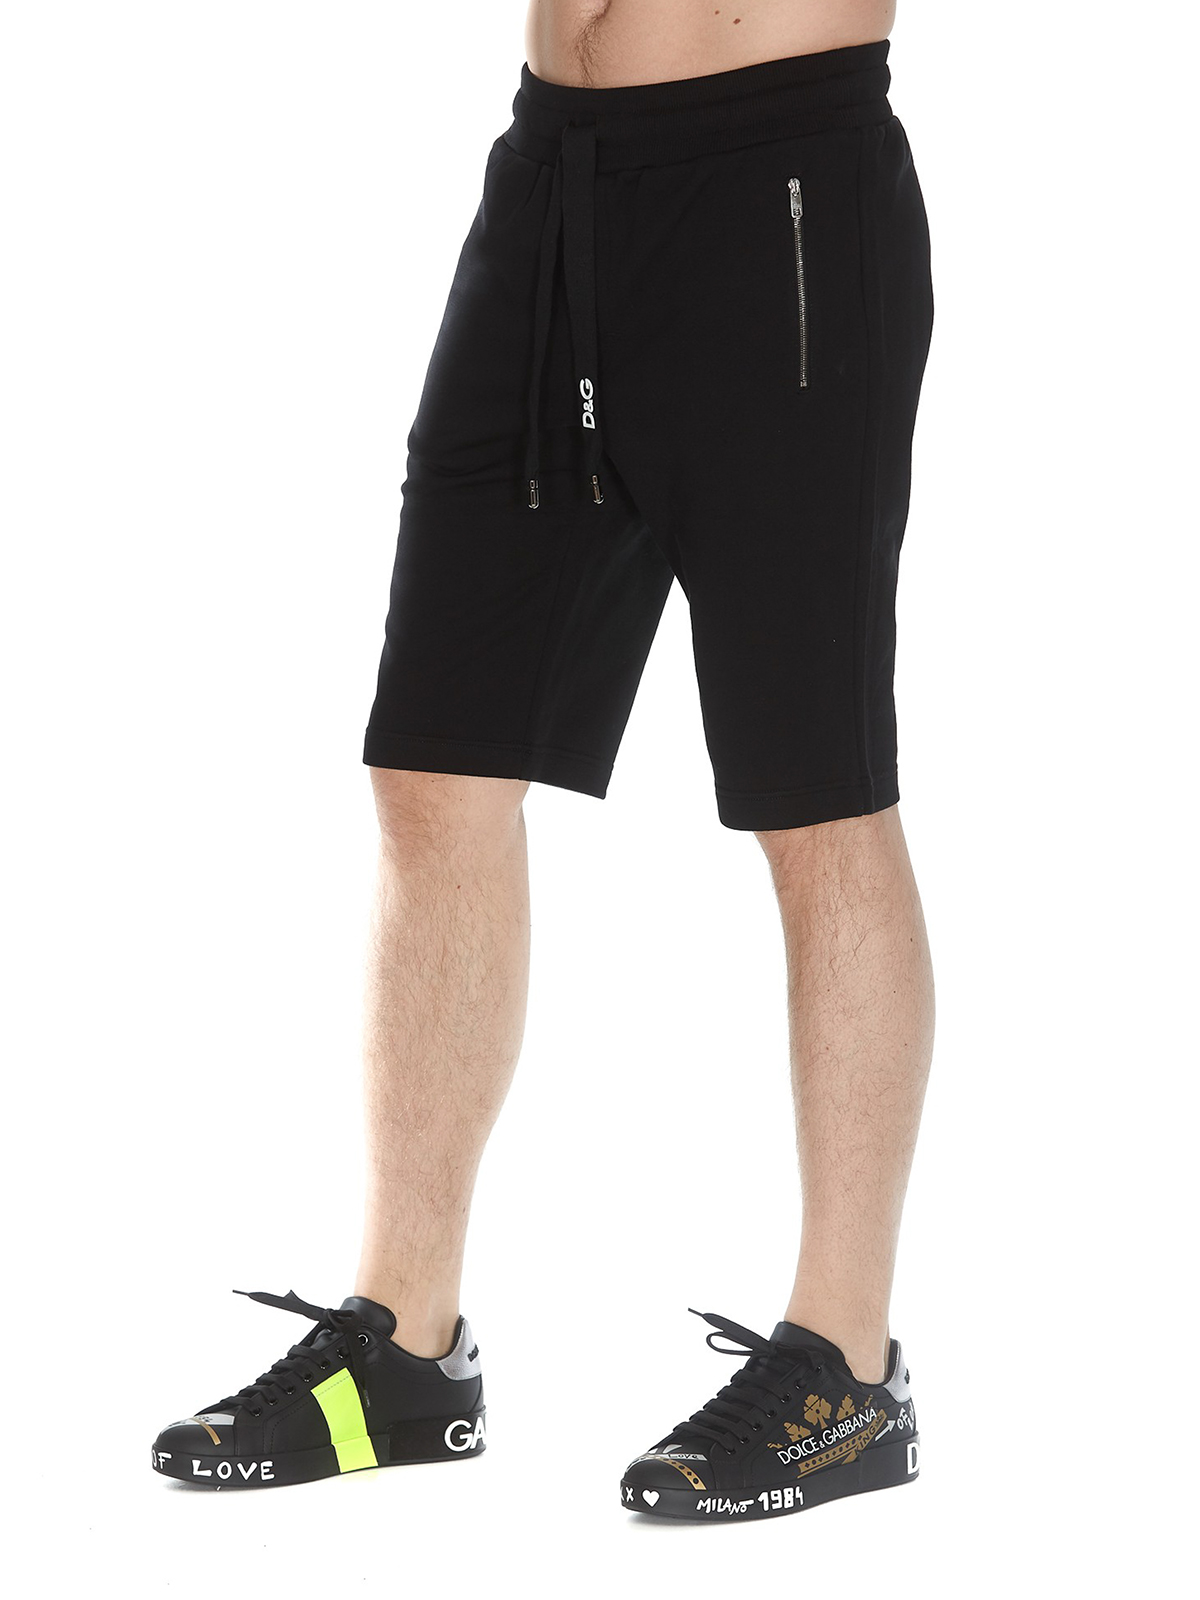 Tracksuit bottoms Dolce & Gabbana - Solid black cotton jogging short pants  - GYFKEZFU7DUN0000